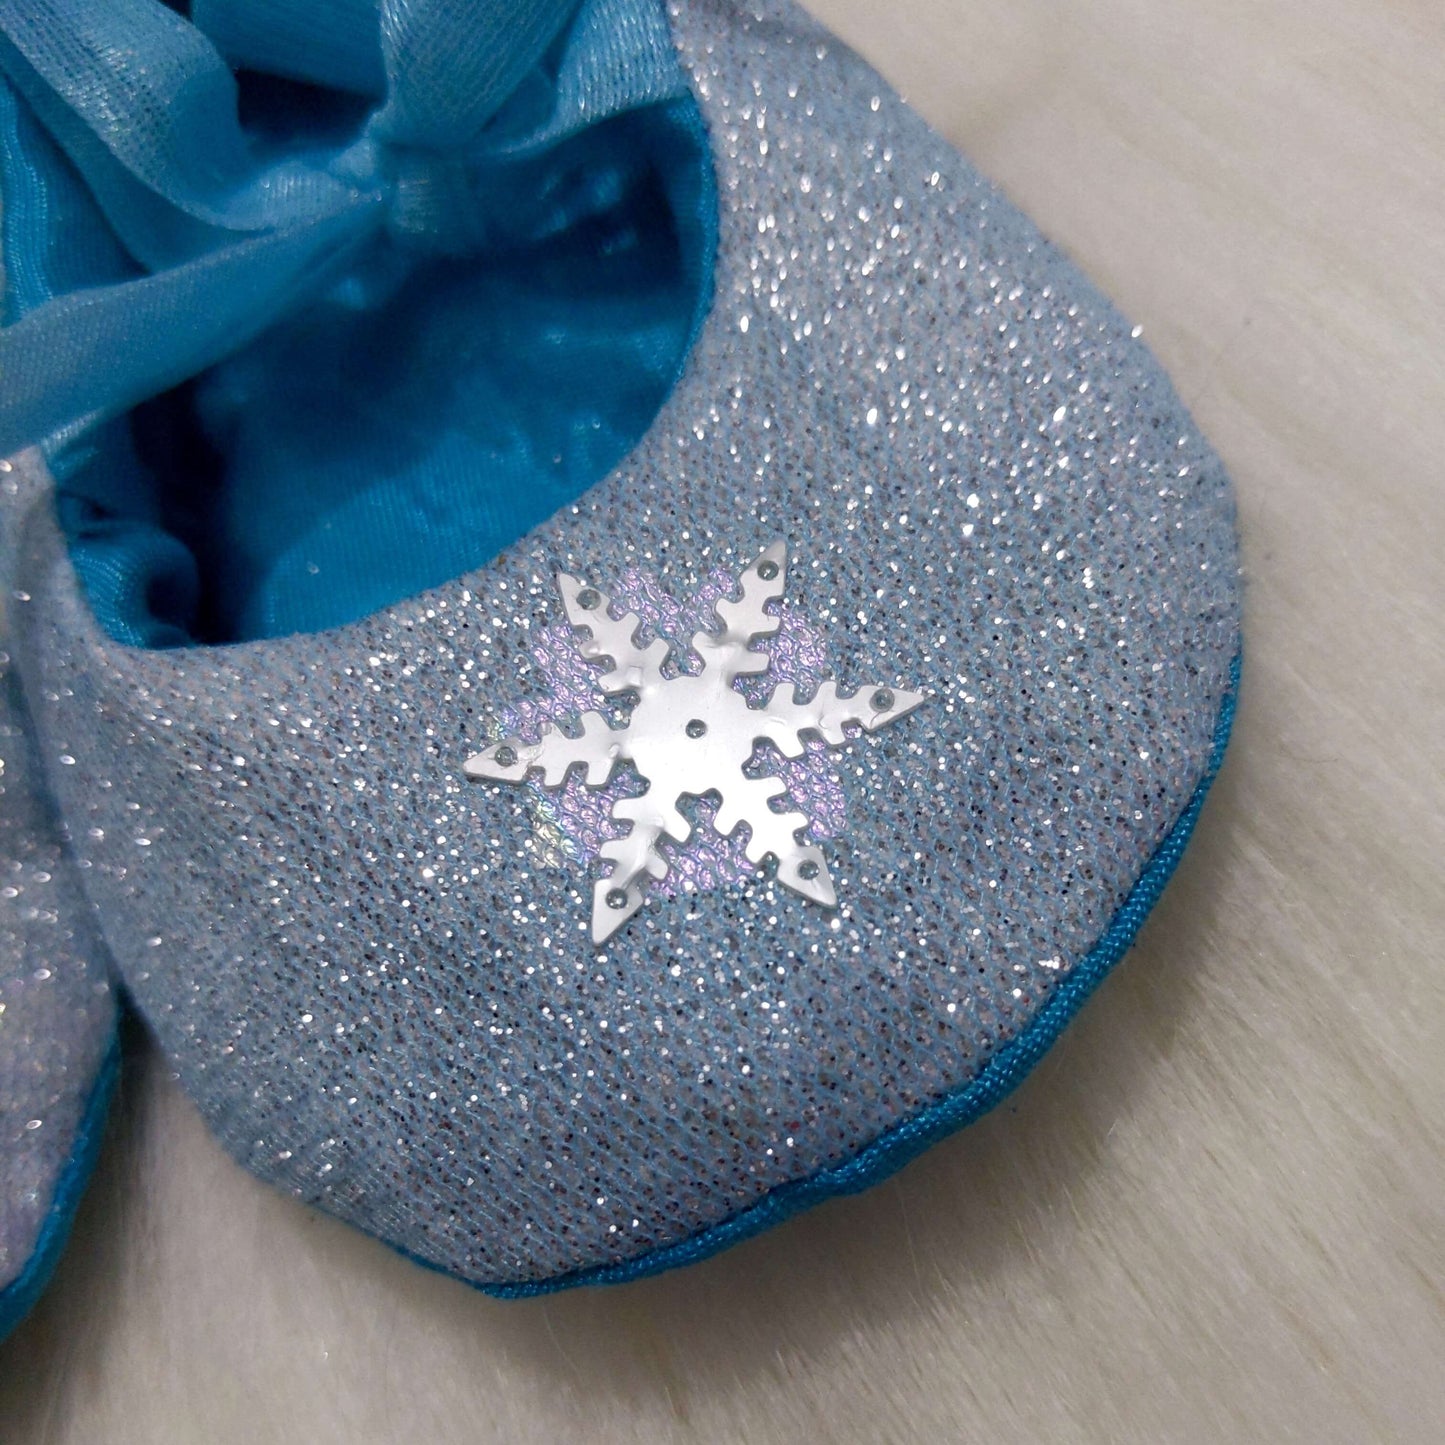 Frozen Disney Princess Light Blue Booties | Designer Accessories for Kids | Complete the Look